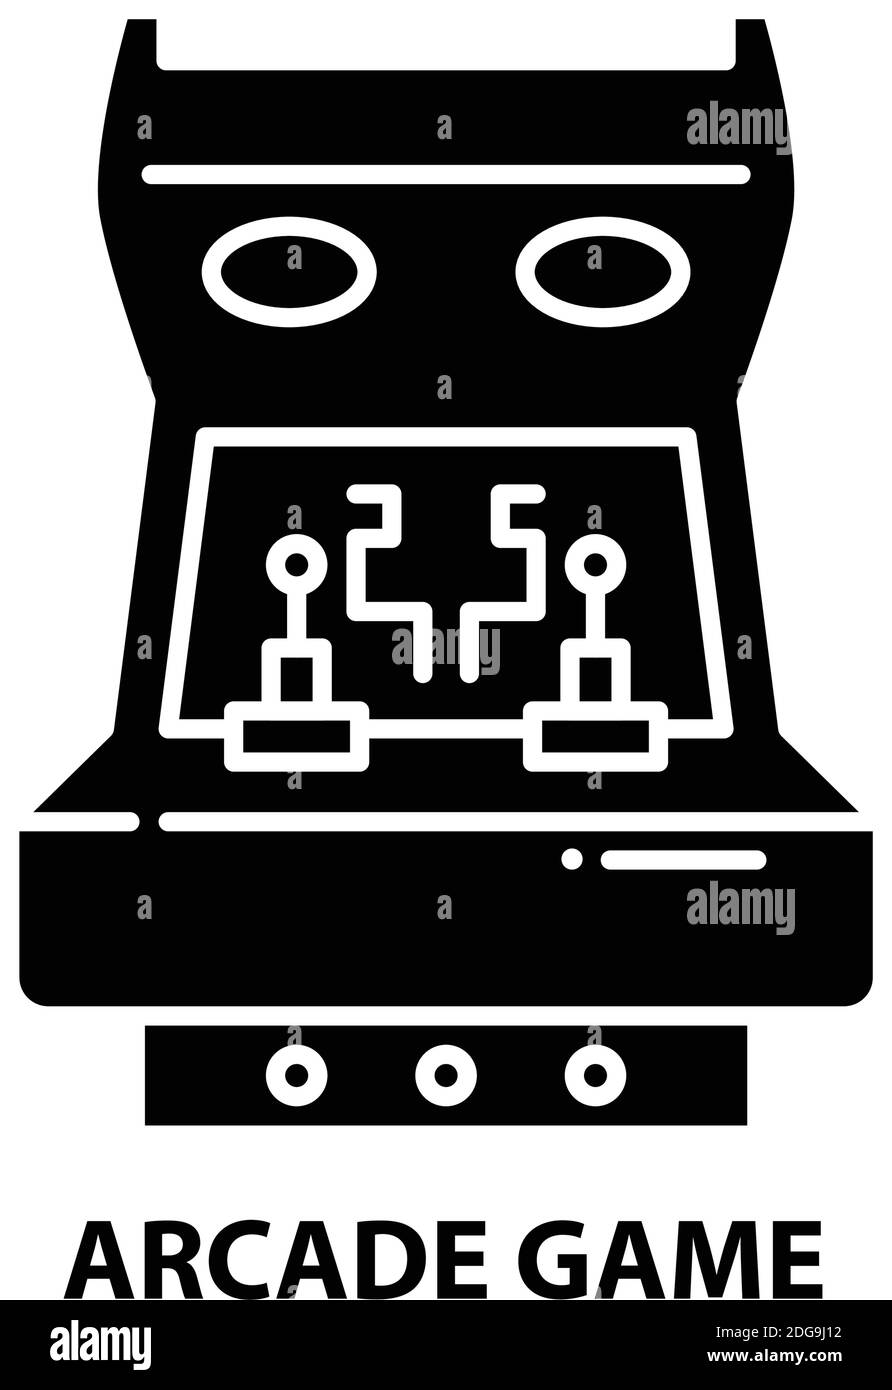 arcade game icon, black vector sign with editable strokes, concept illustration Stock Vector